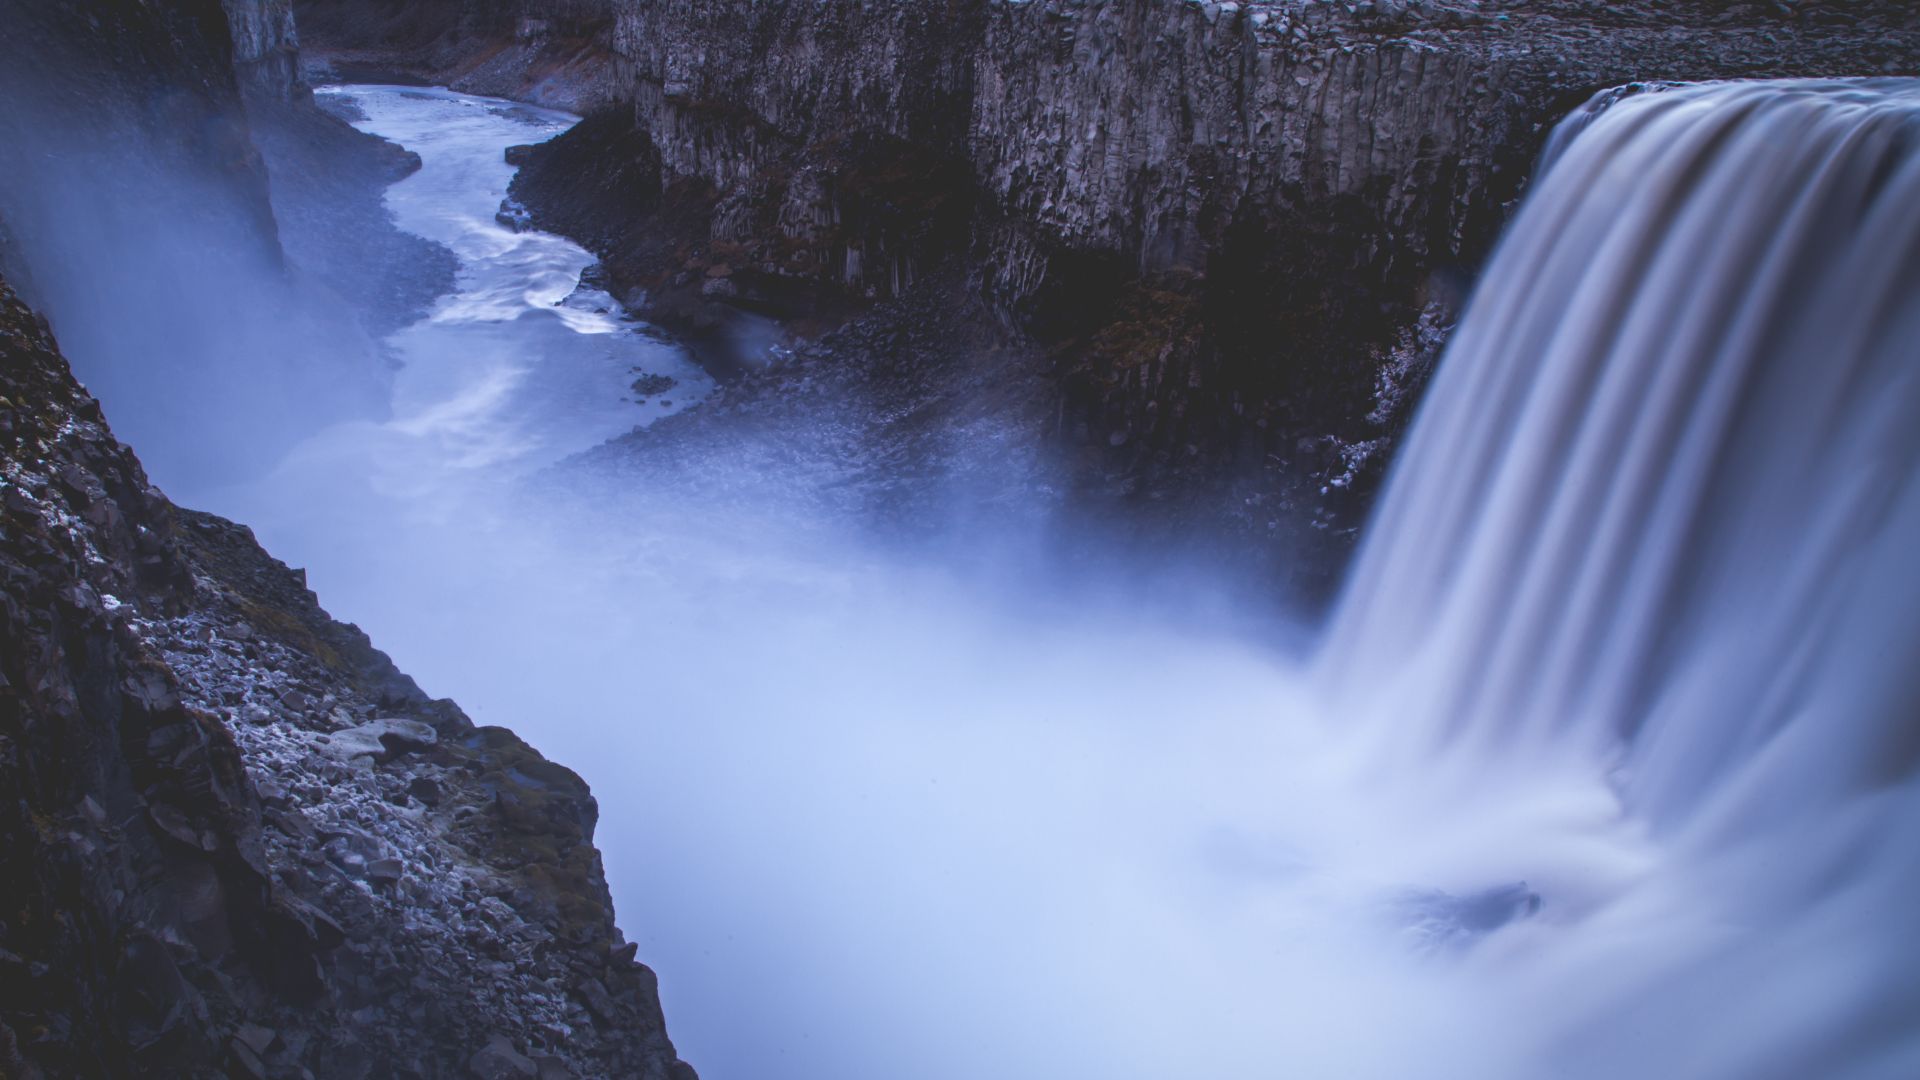 Деттифосс, 5k, 4k, Исландия, водопад, скалы, Dettifoss, 5k, 4k wallpaper, Iceland, waterfall, rocks (horizontal)